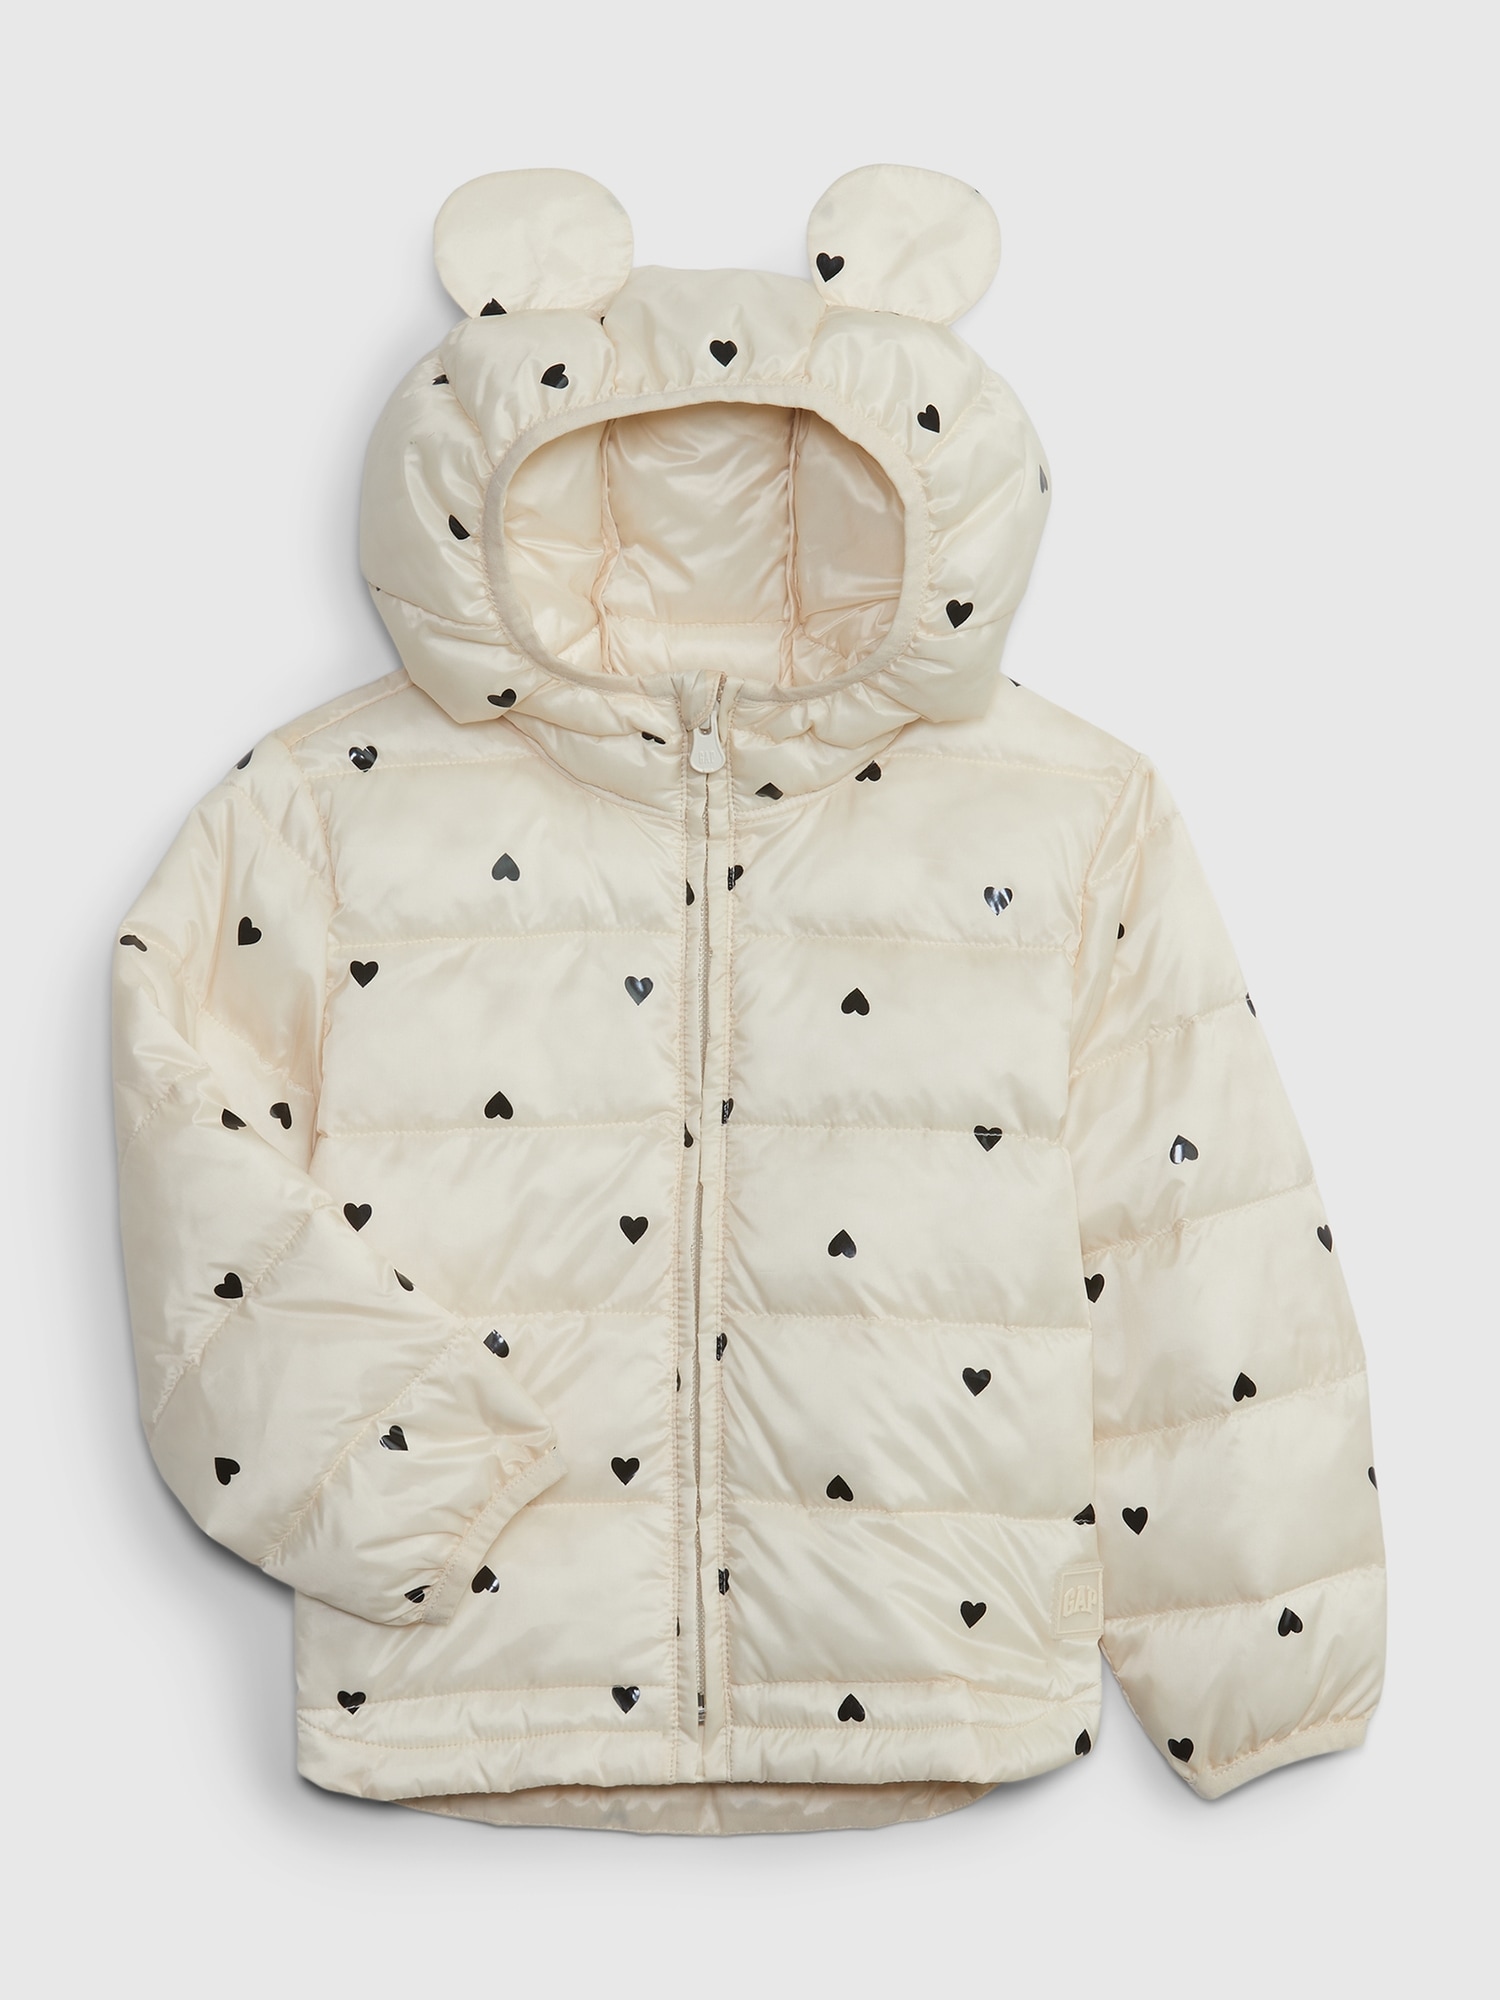 Gap Kids Rare Galaxy Zip Hooded Puffer Jacket XXL ( 14-16) | eBay